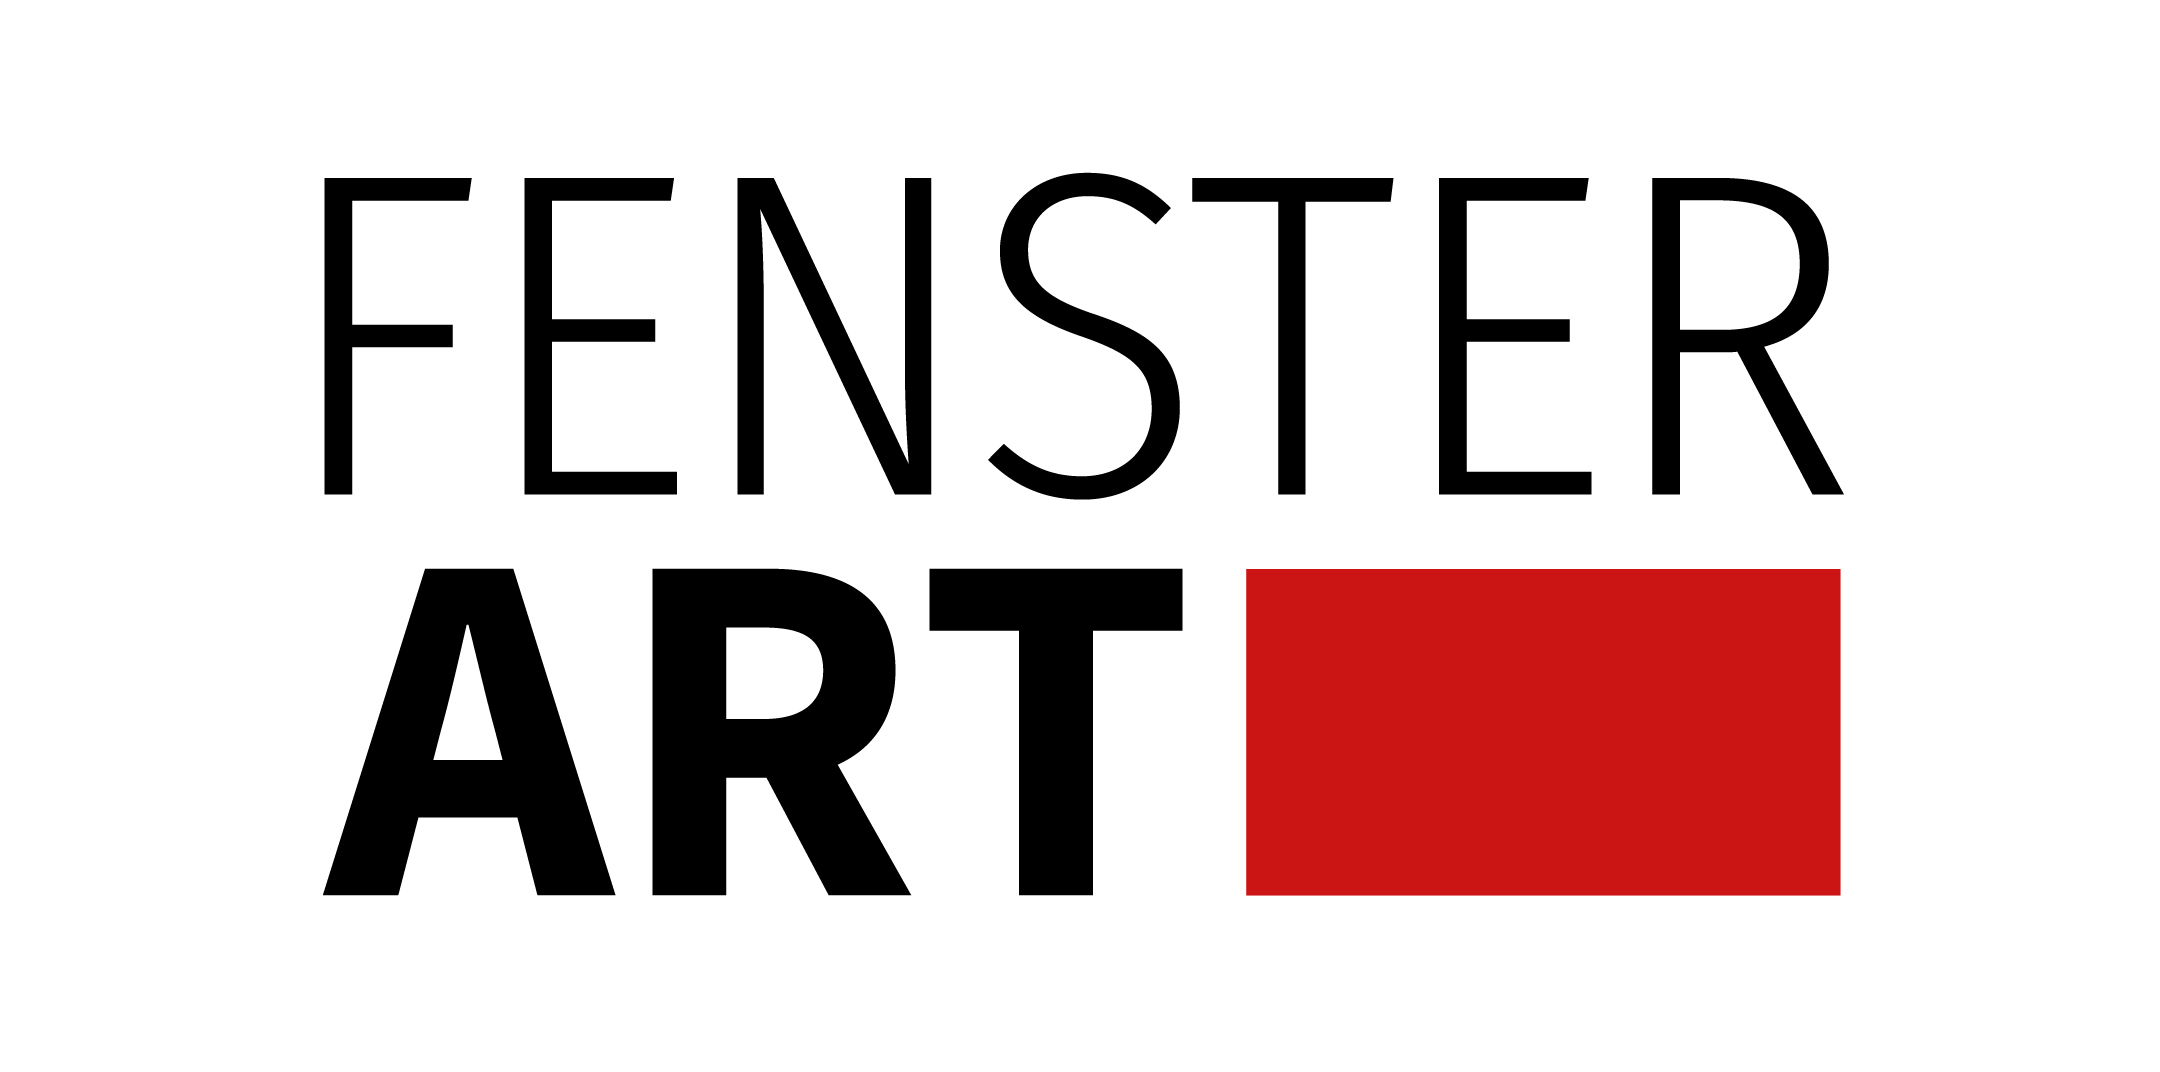 FENSTERART GmbH & Co. KG